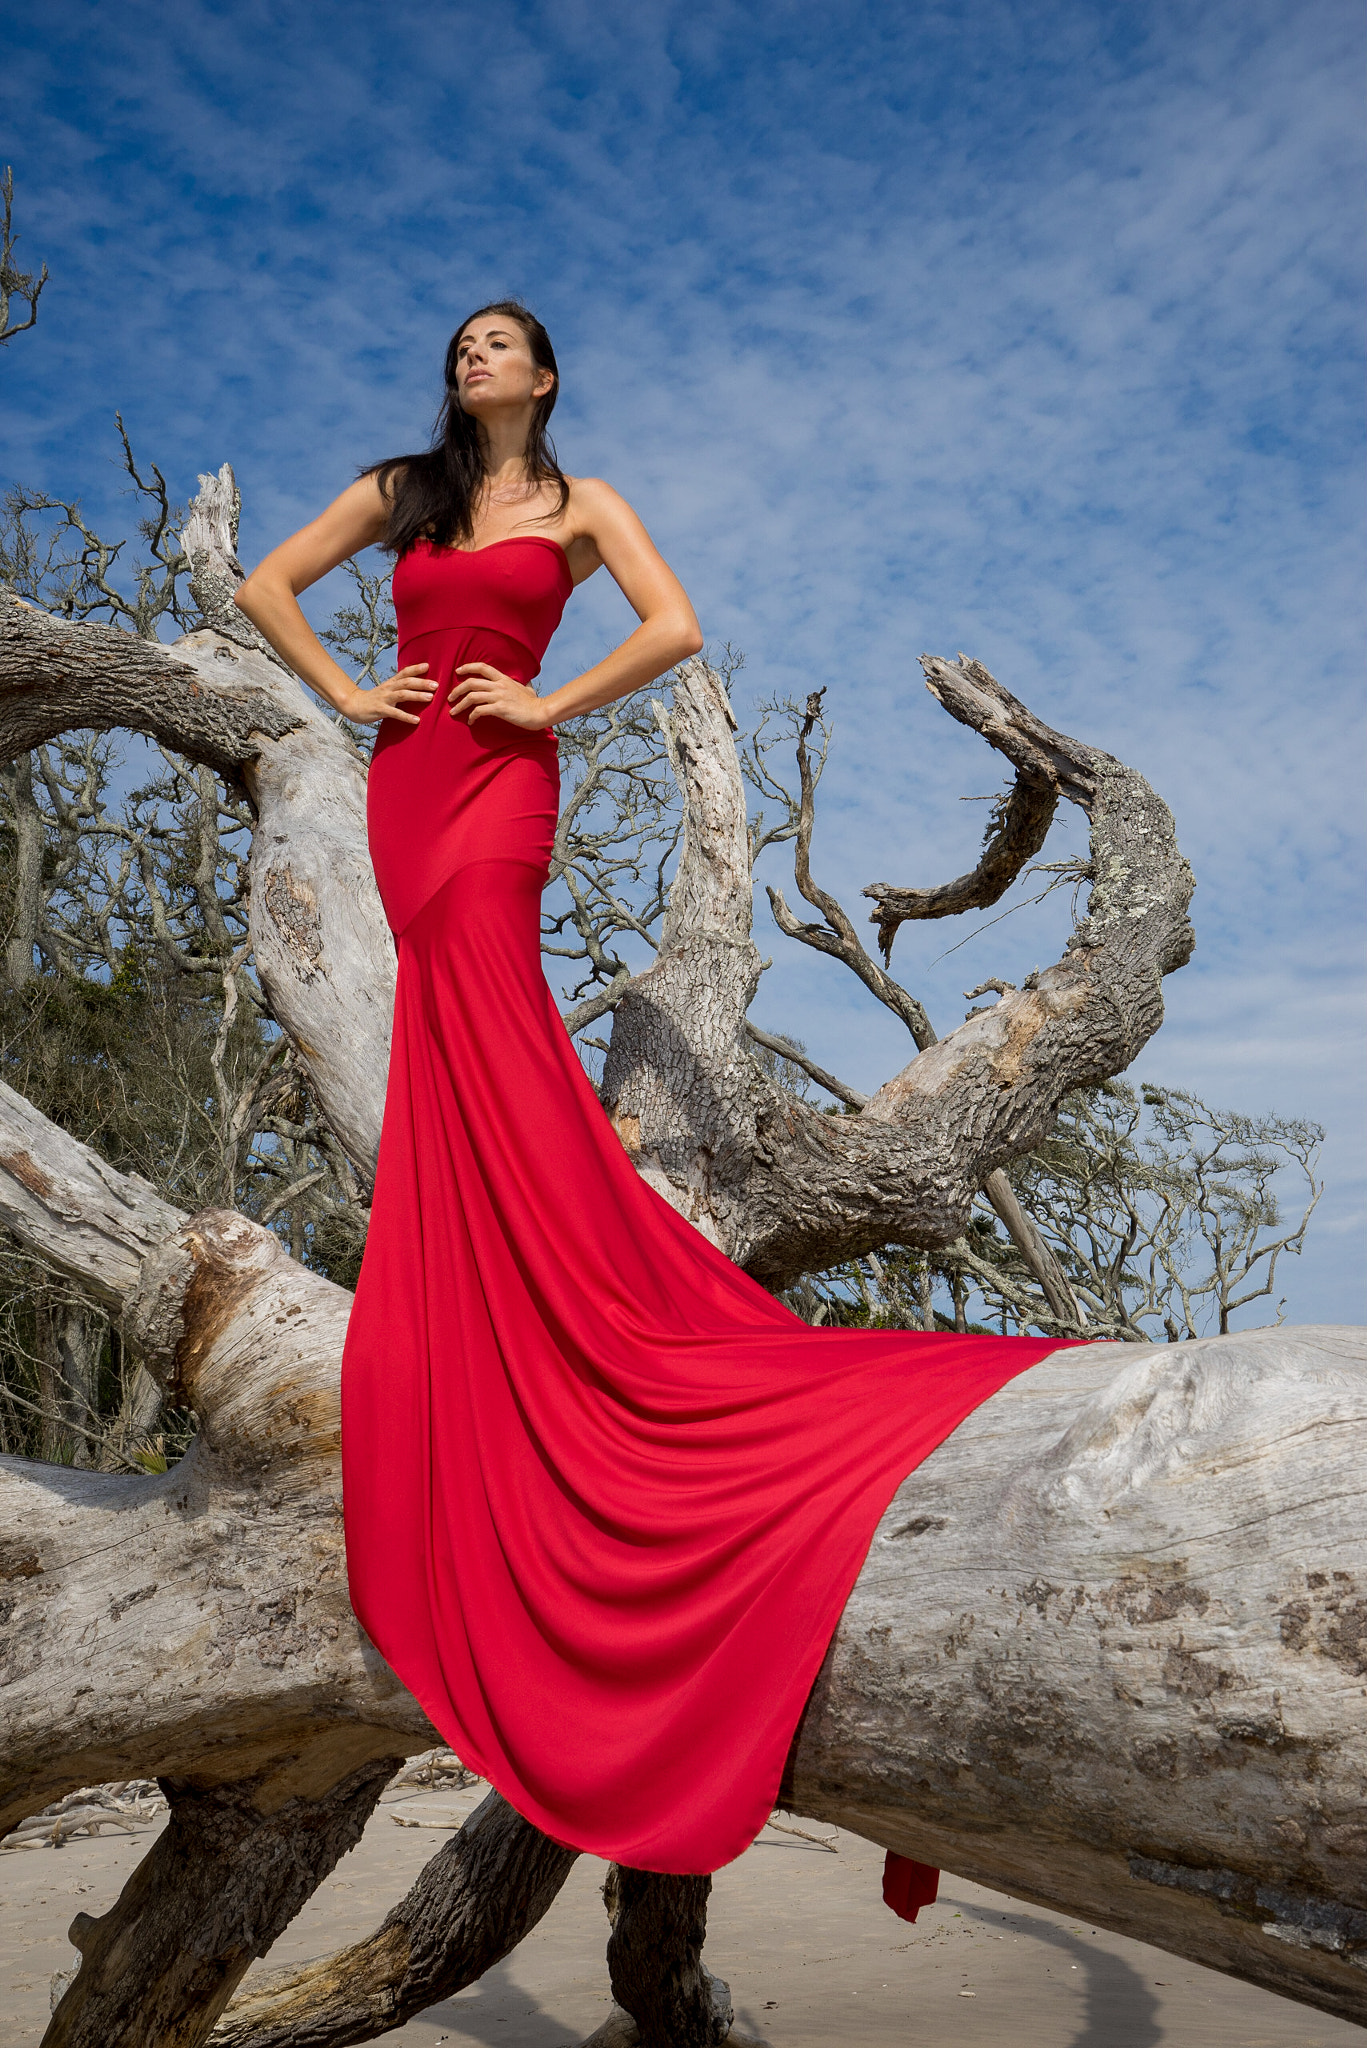 red dress , woman & Drift wood